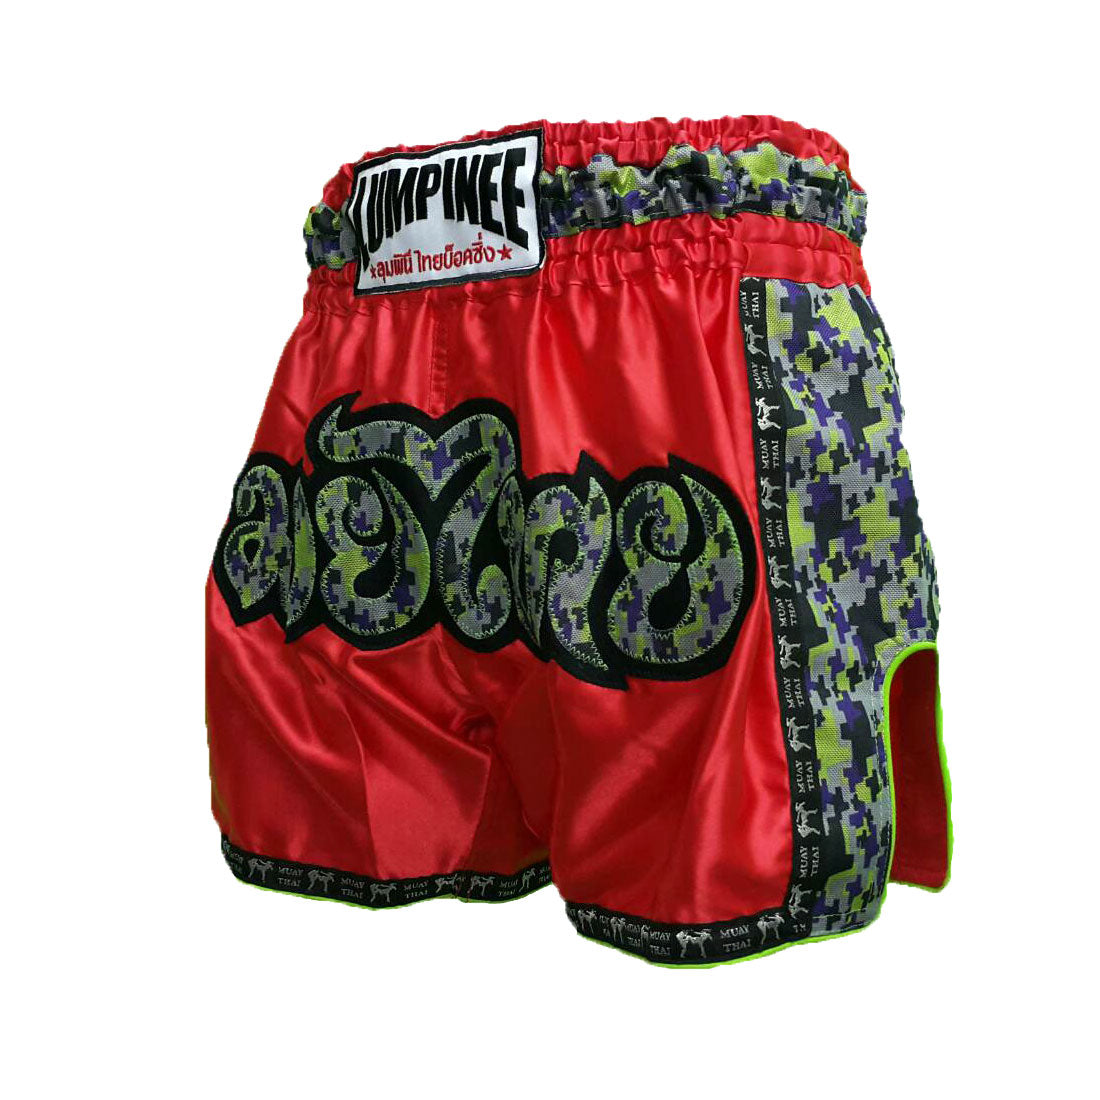 LUMPINEE MUAY THAI SHORTS Retro Fight Kickboxing Men & Women Clothing ...